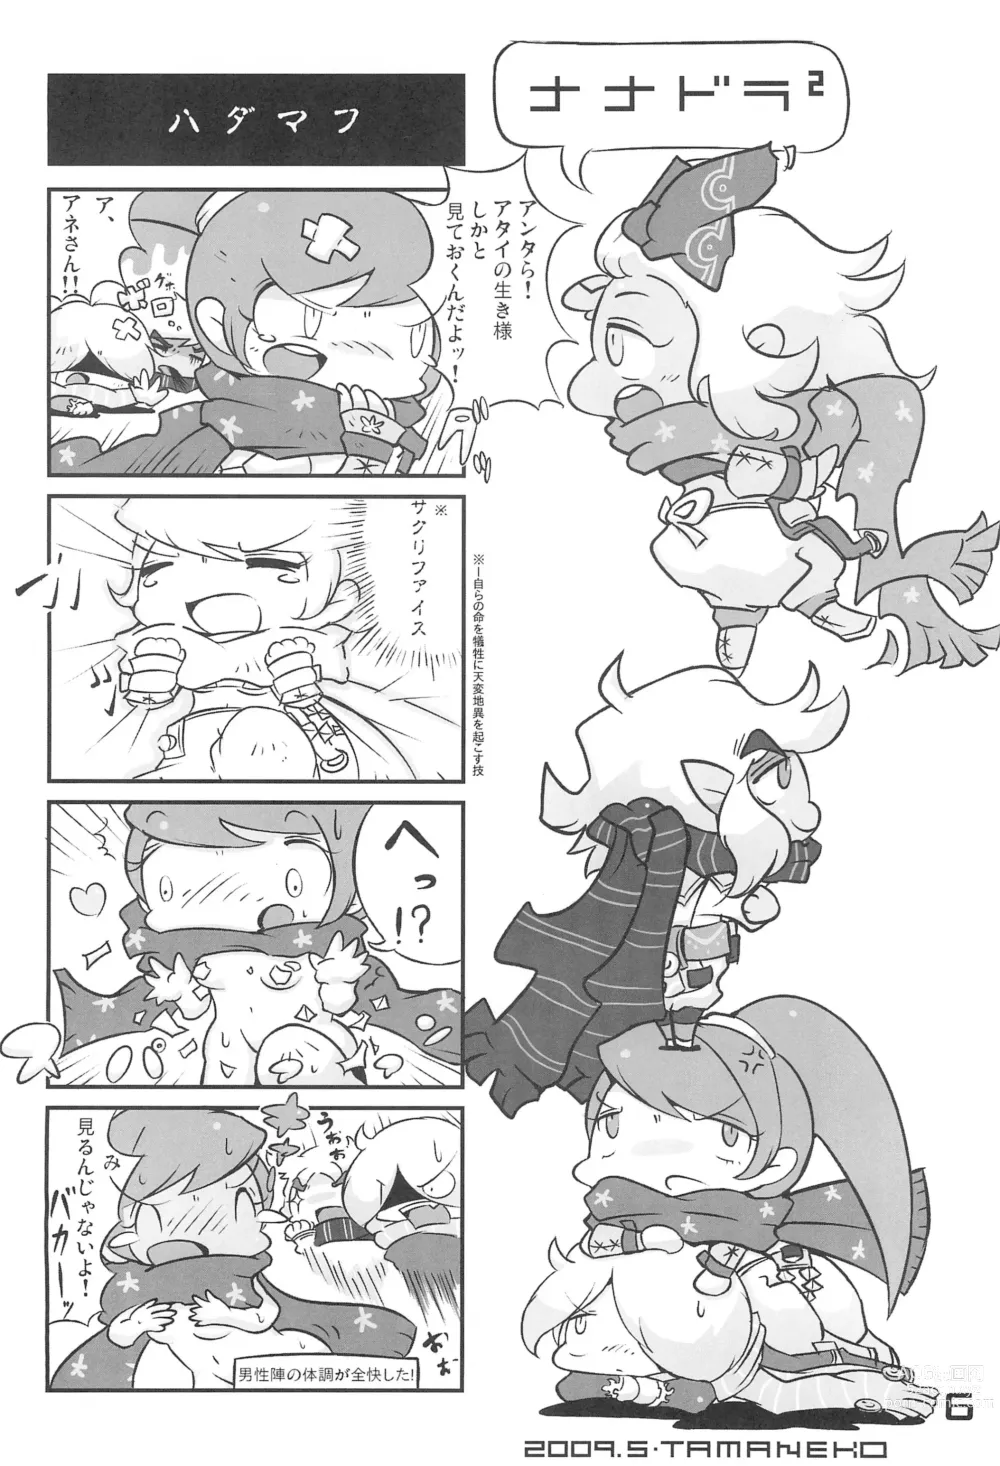 Page 6 of doujinshi Nana*Dra 2